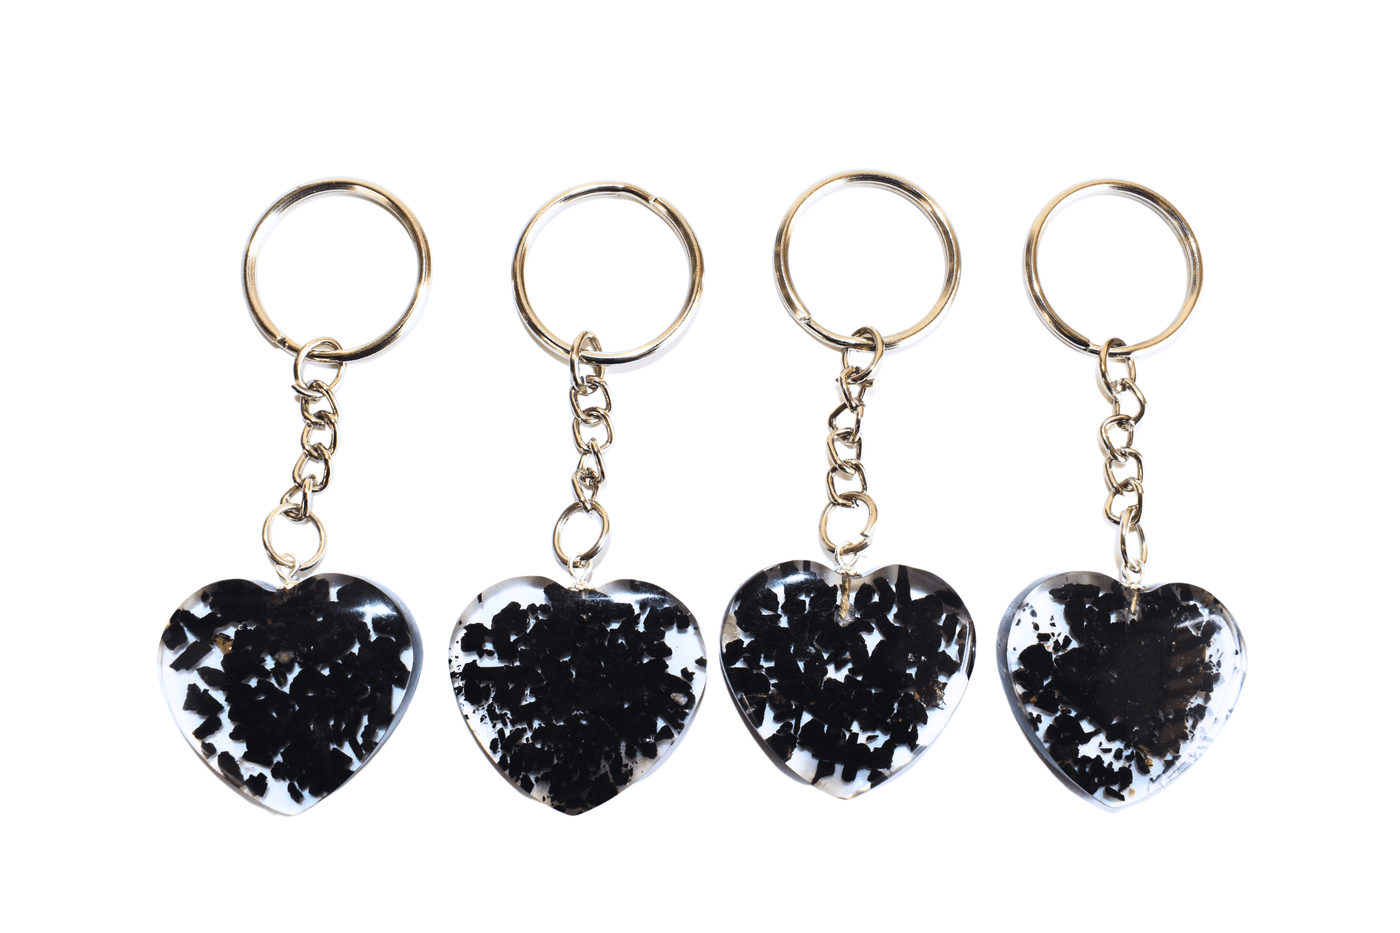 Black Tourmaline Key Chain, Gemstone Keychain Crystal Key Ring (Protection and Strength)